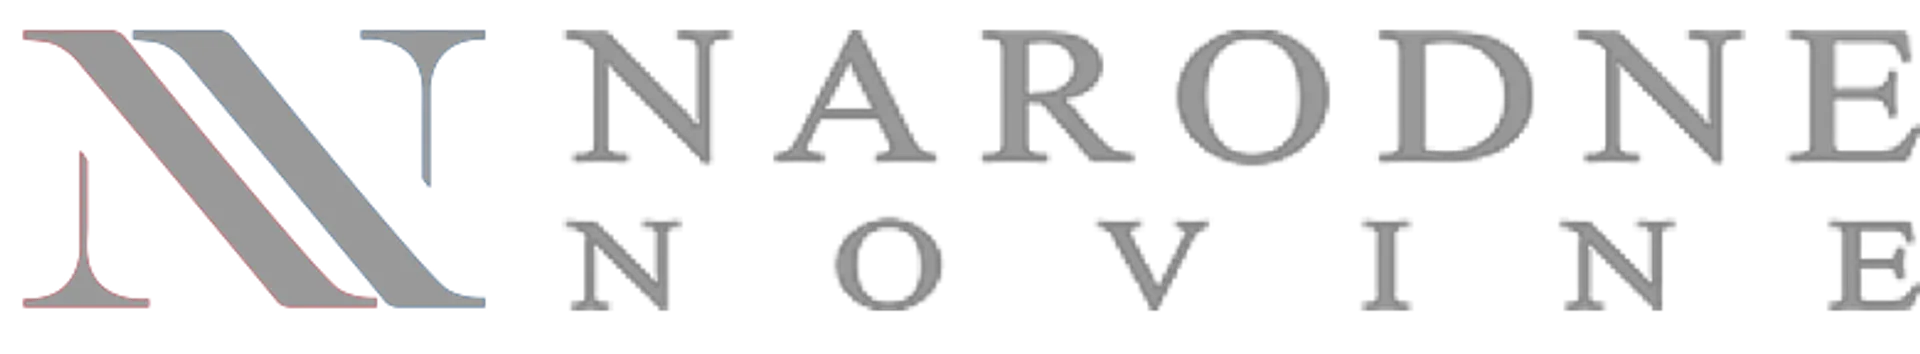 NARODNE NOVINE logo